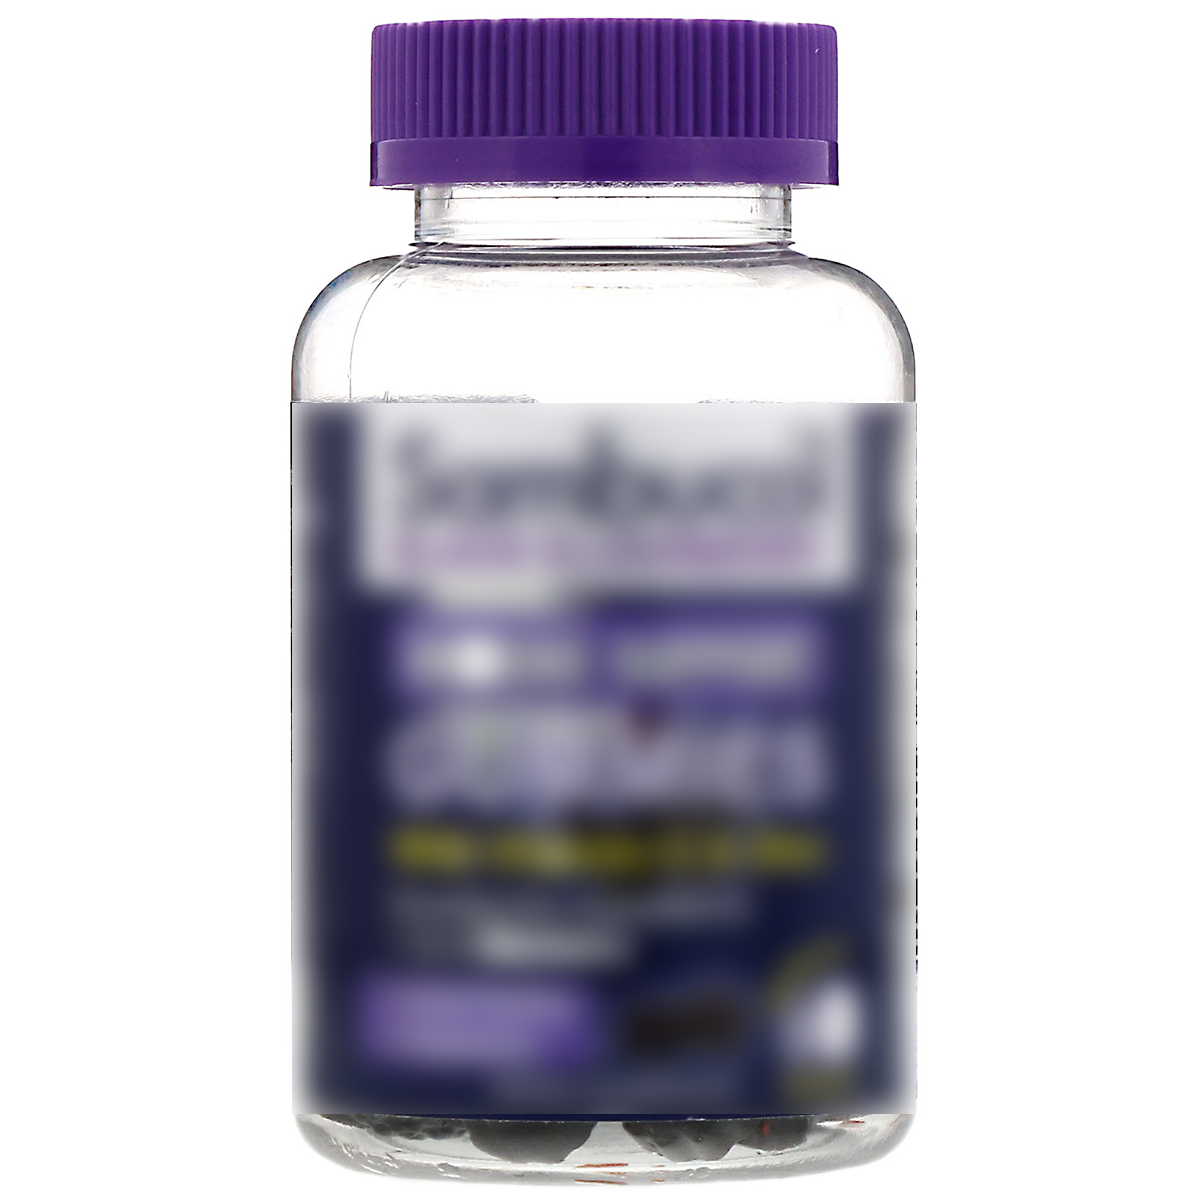 Brand X bottle elderberry supplement to the best elderberry gummy supplement